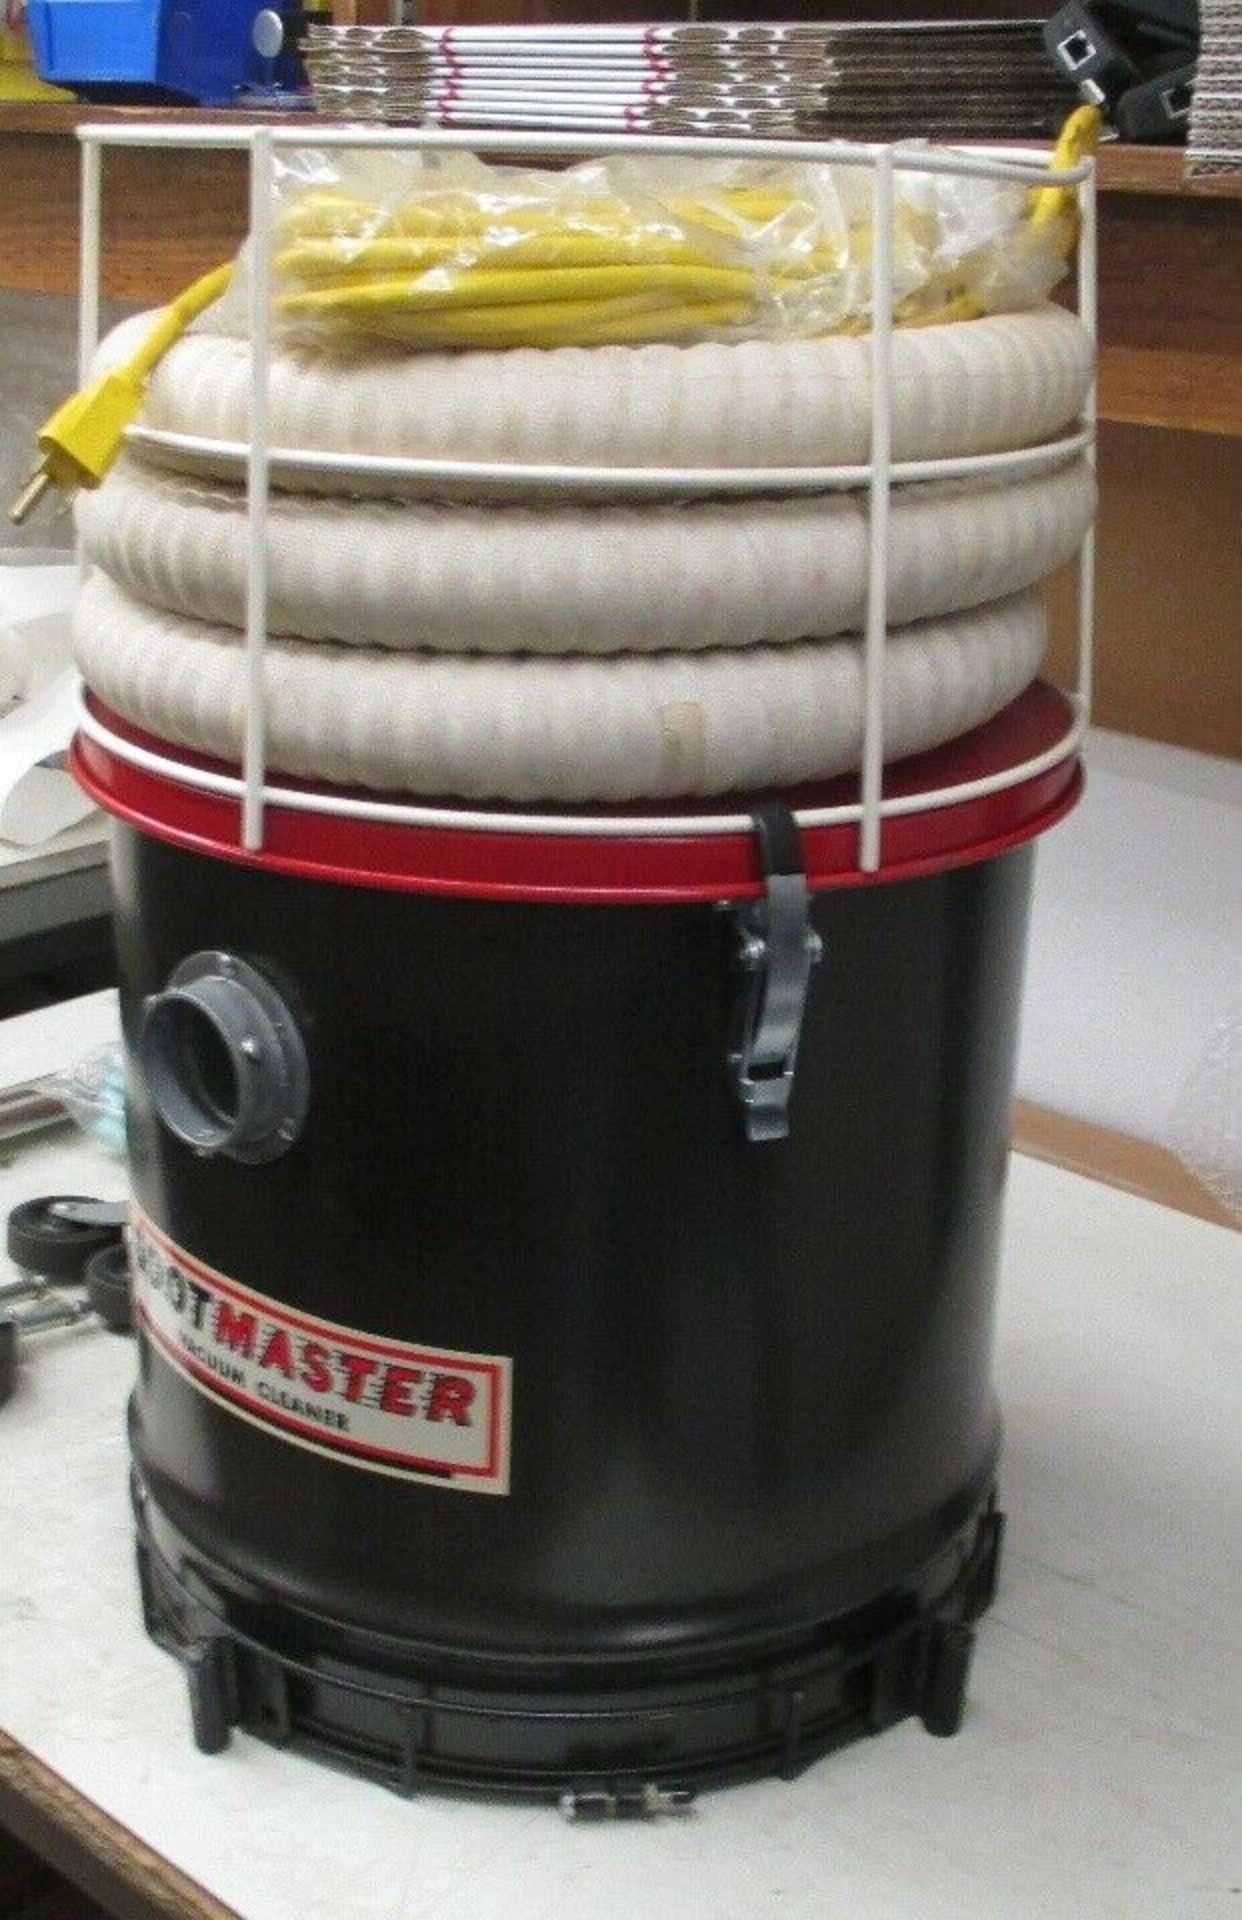 Mastercraft Ind. Sootmaster Vacuum Cleaner - Image 4 of 5